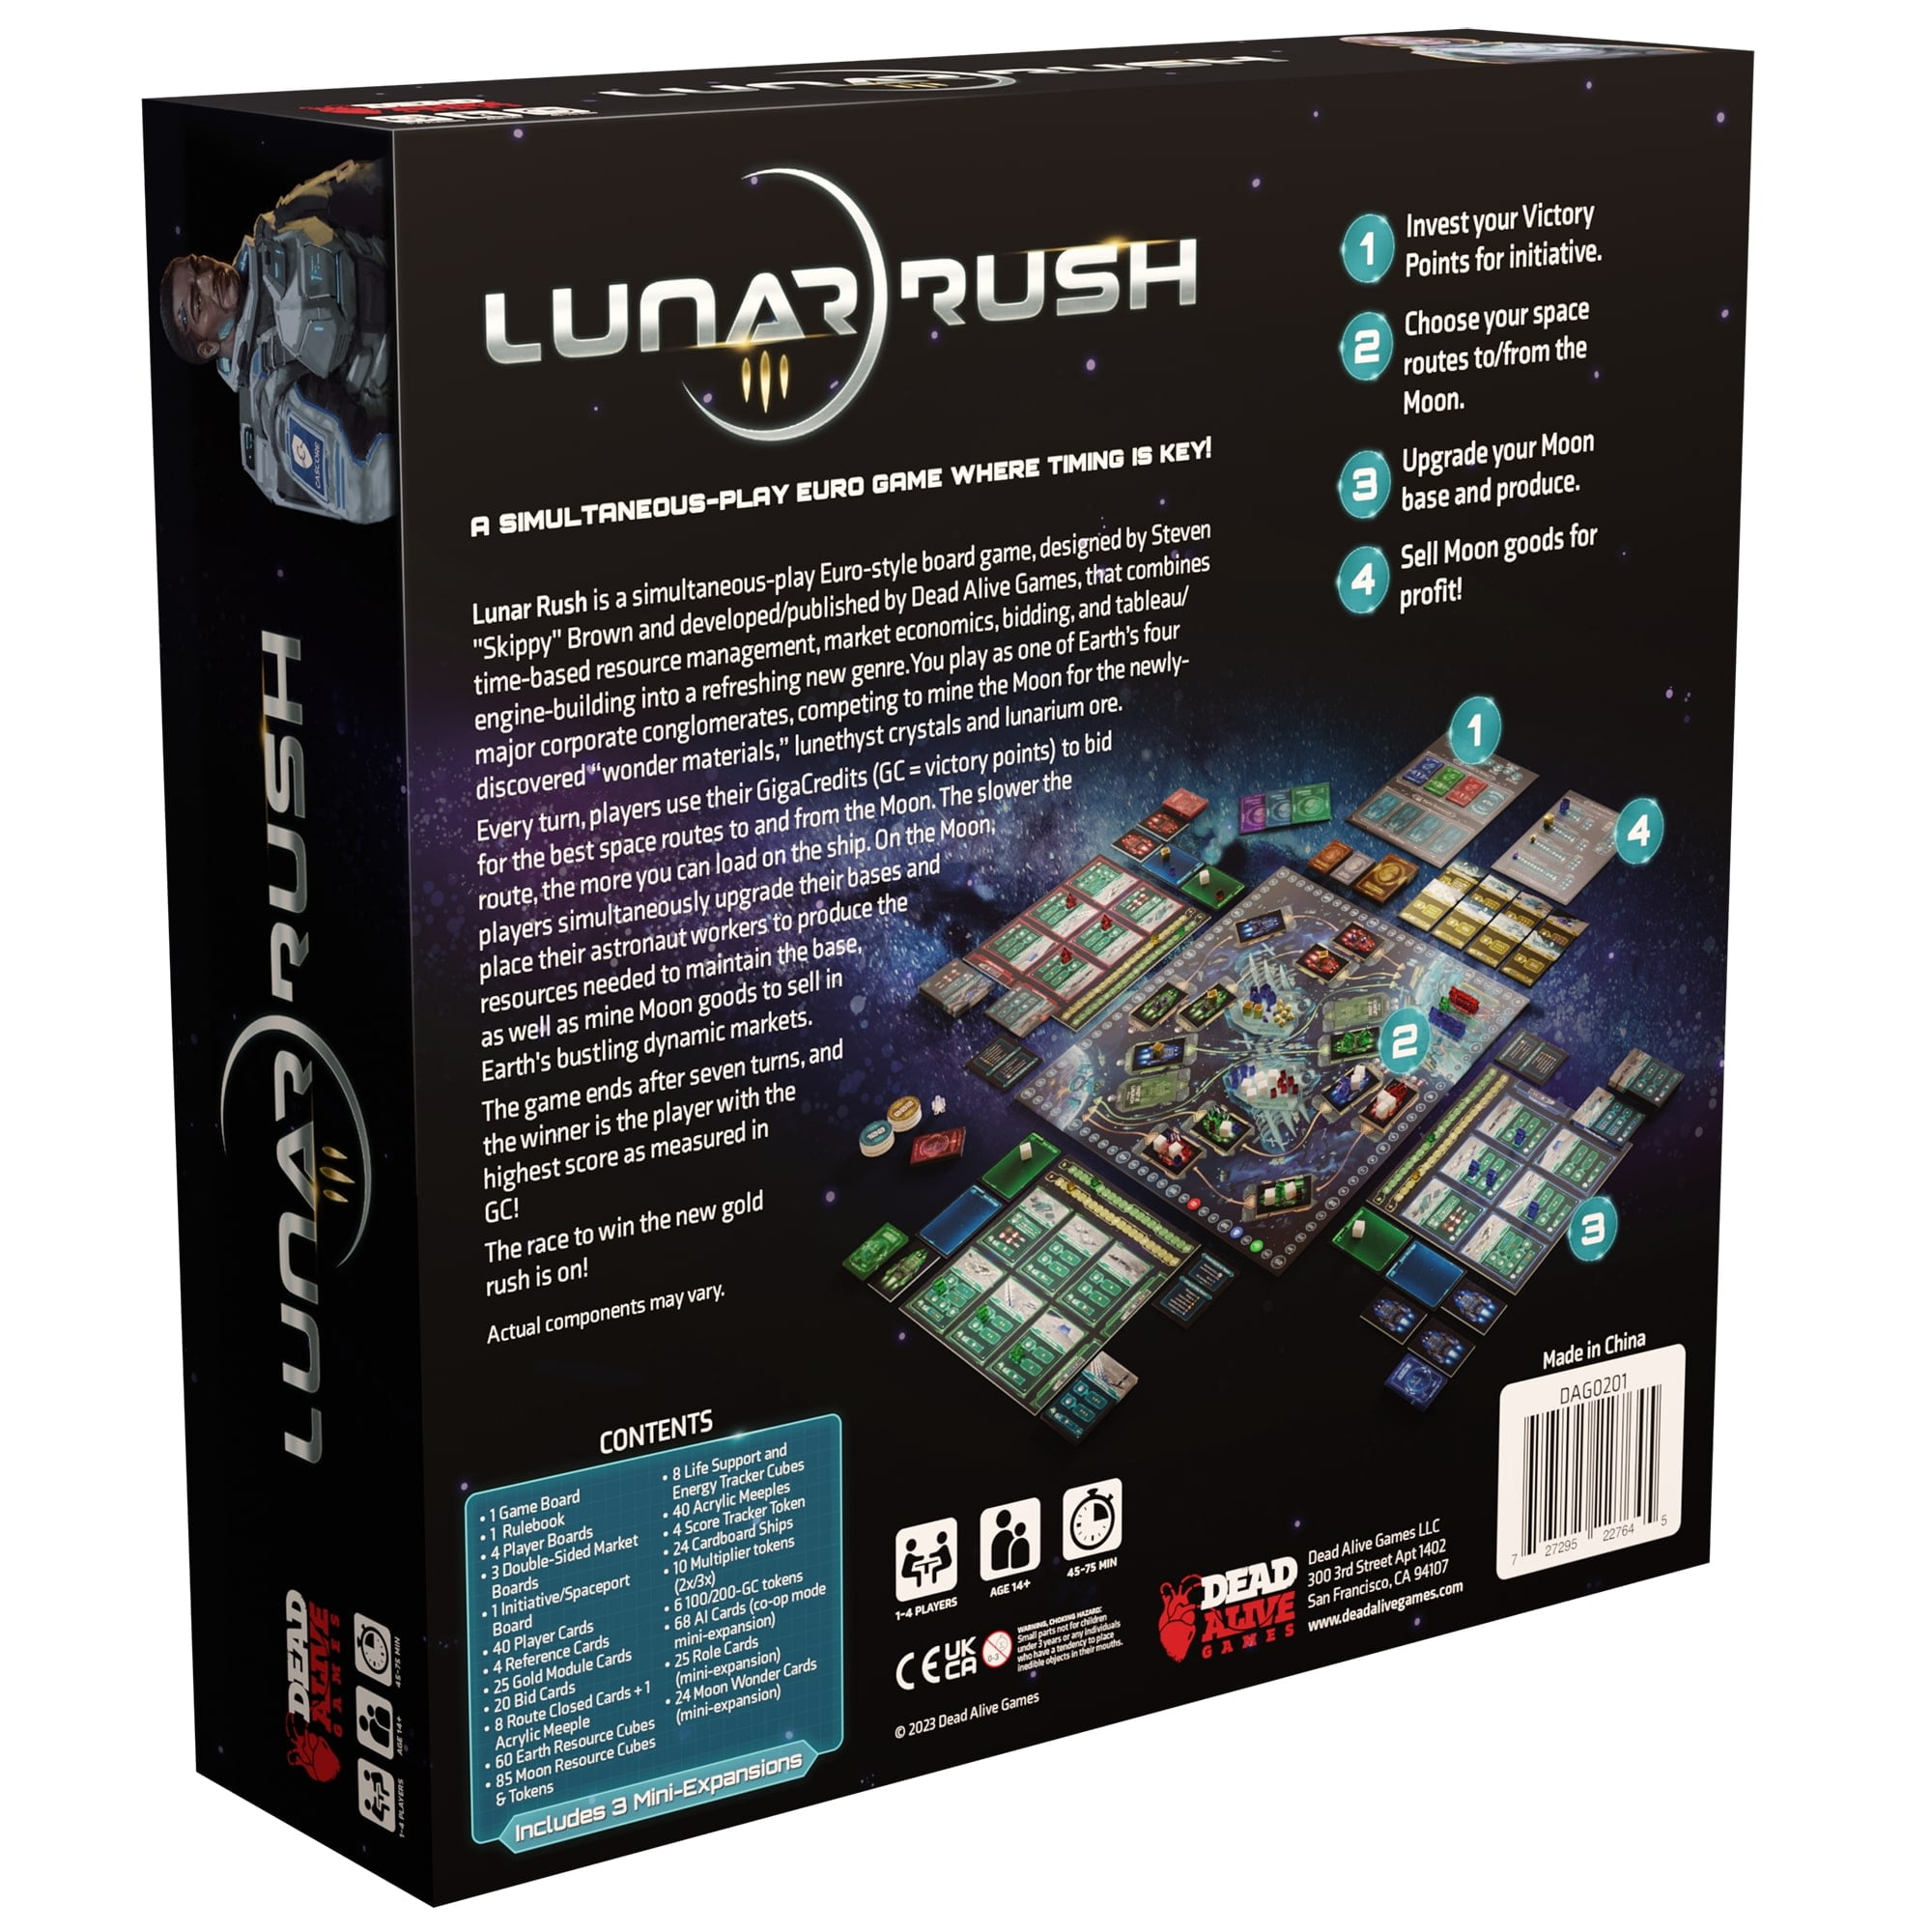 Lunar Rush - A Simultaneous-Play Euro Where Timing is Key!